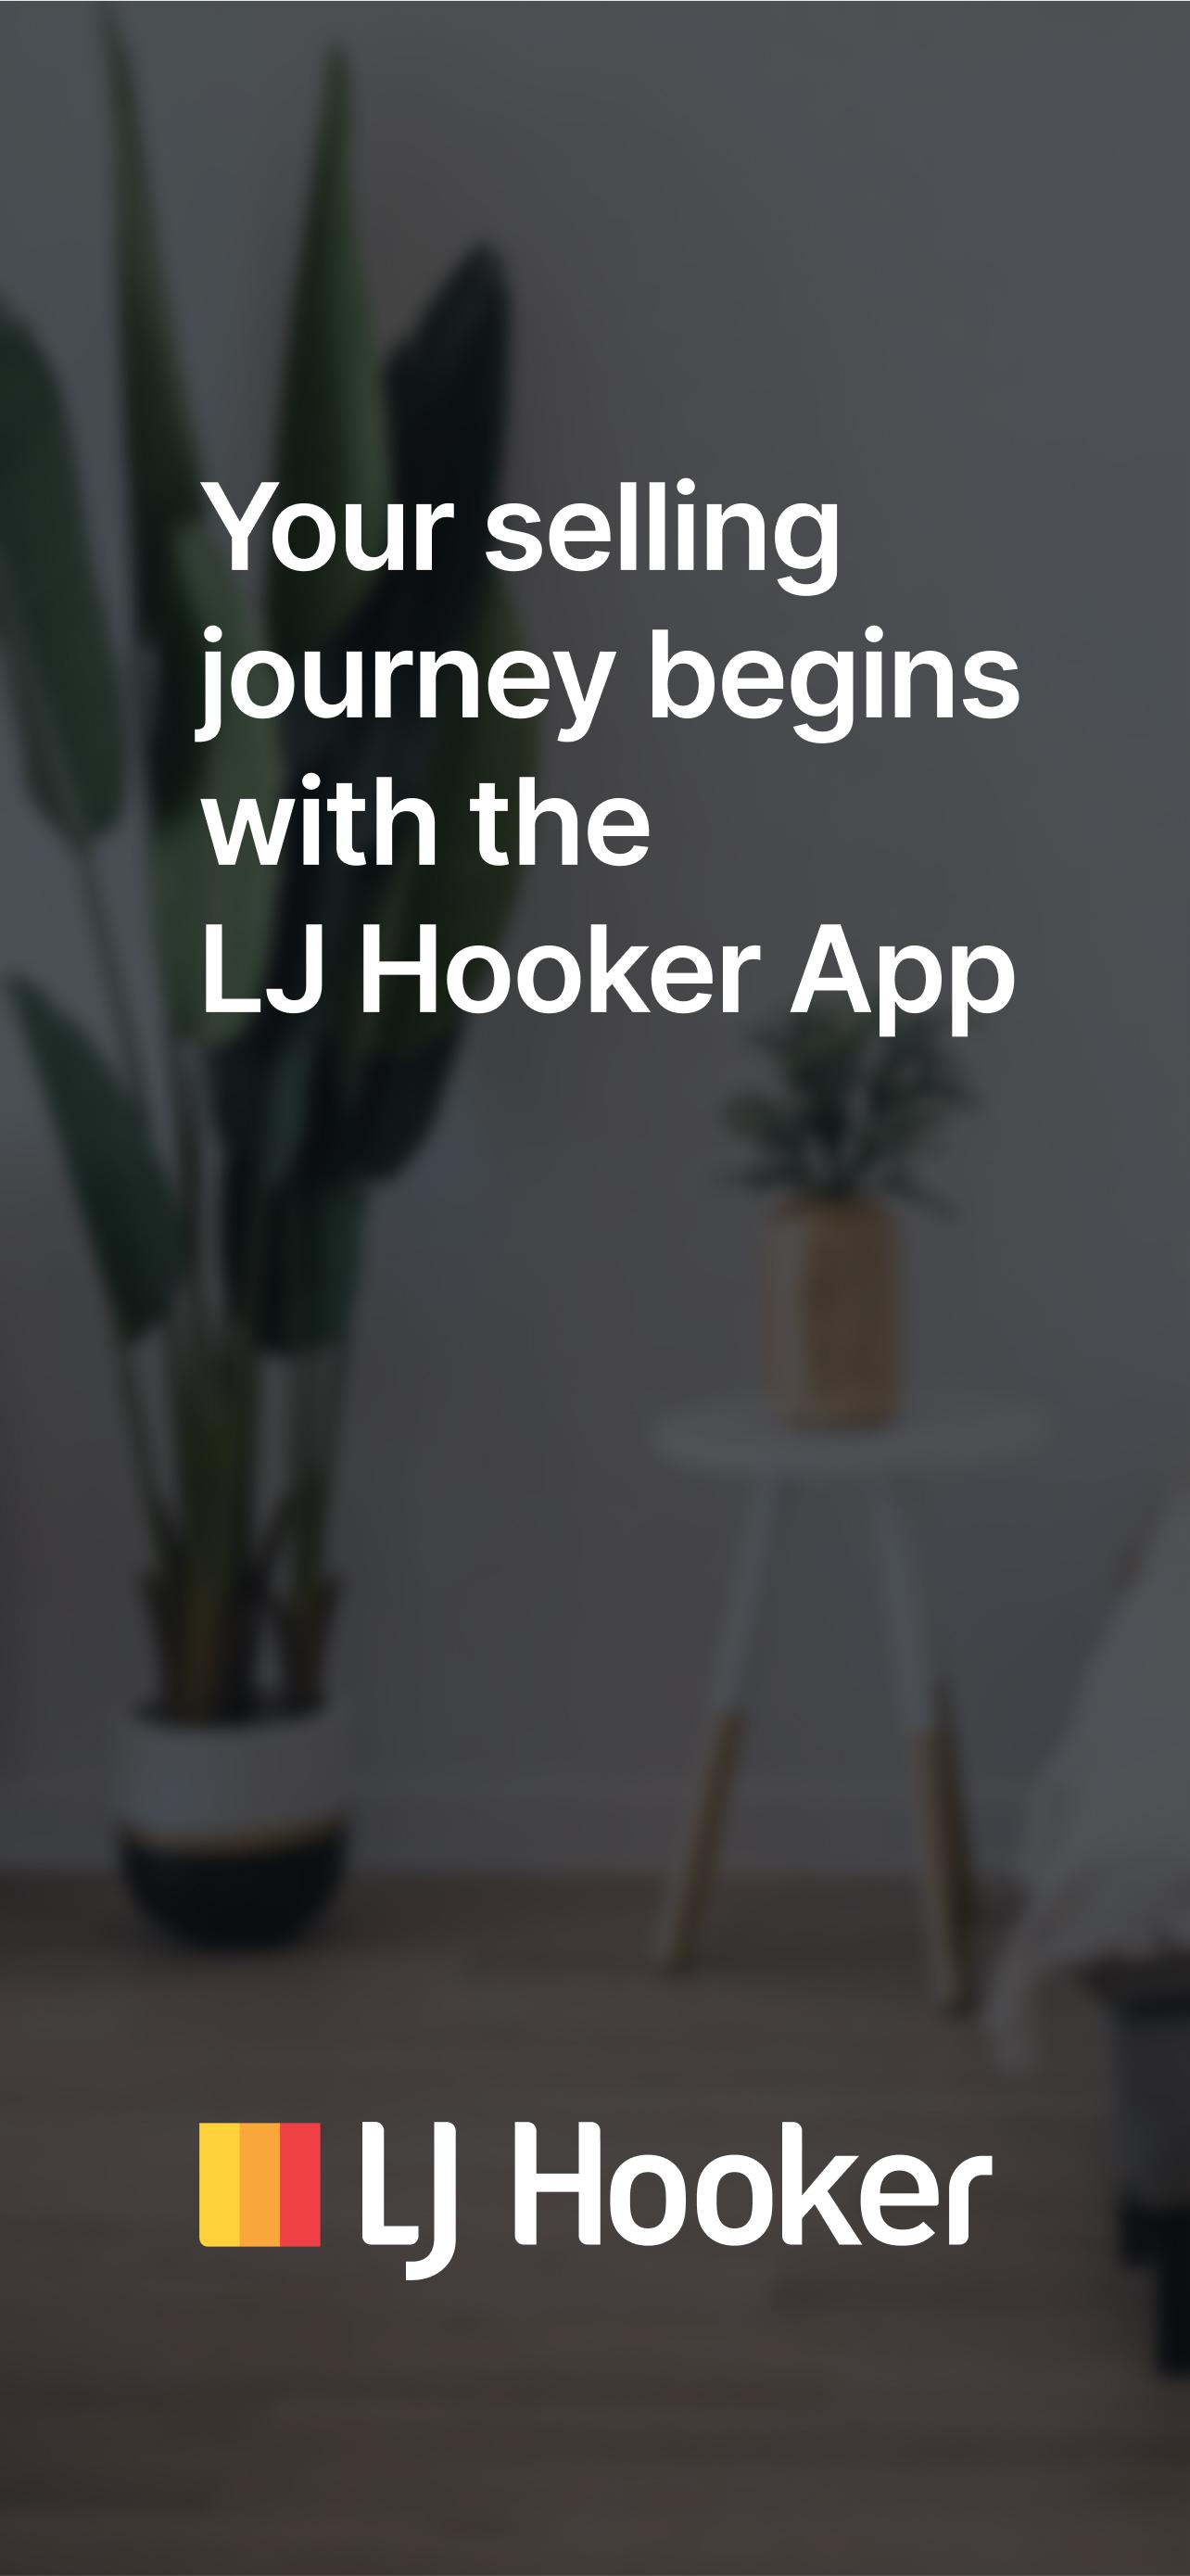 LJ Hooker 3.3.5 Screenshot 1